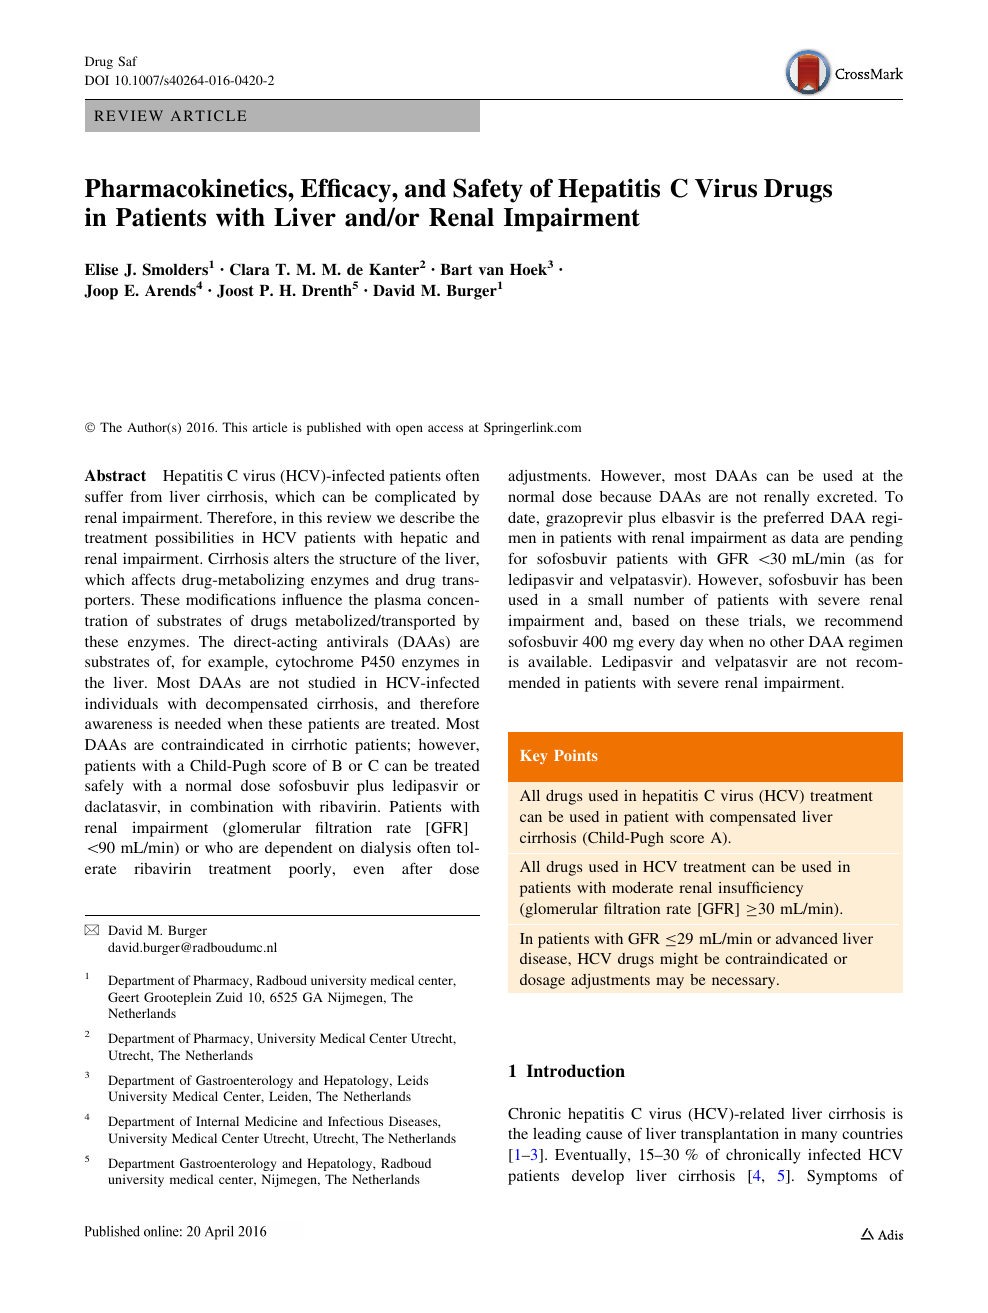 Pharmacokinetics Efficacy And Safety Of Hepatitis C Virus Drugs